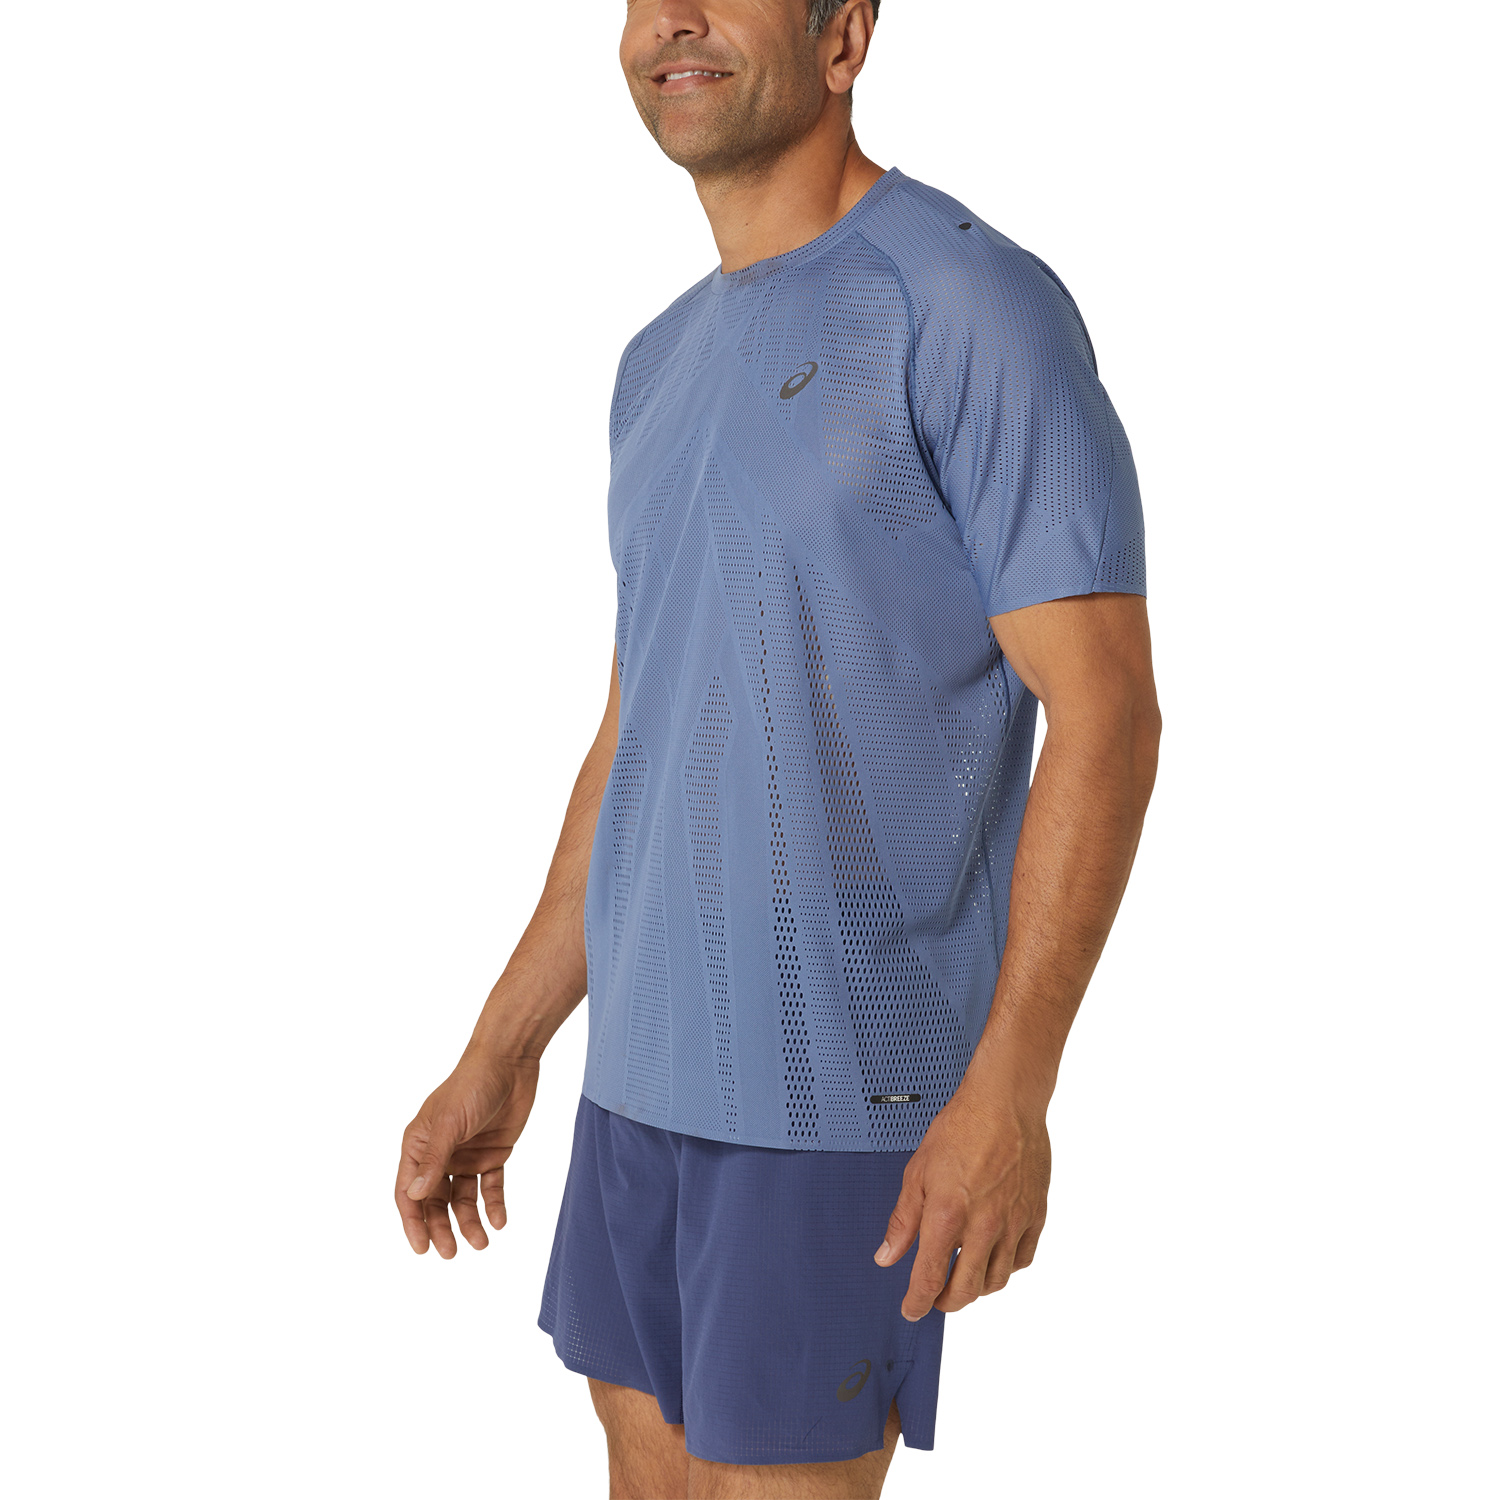 Asics Meta Run T-Shirt - Demin Blue